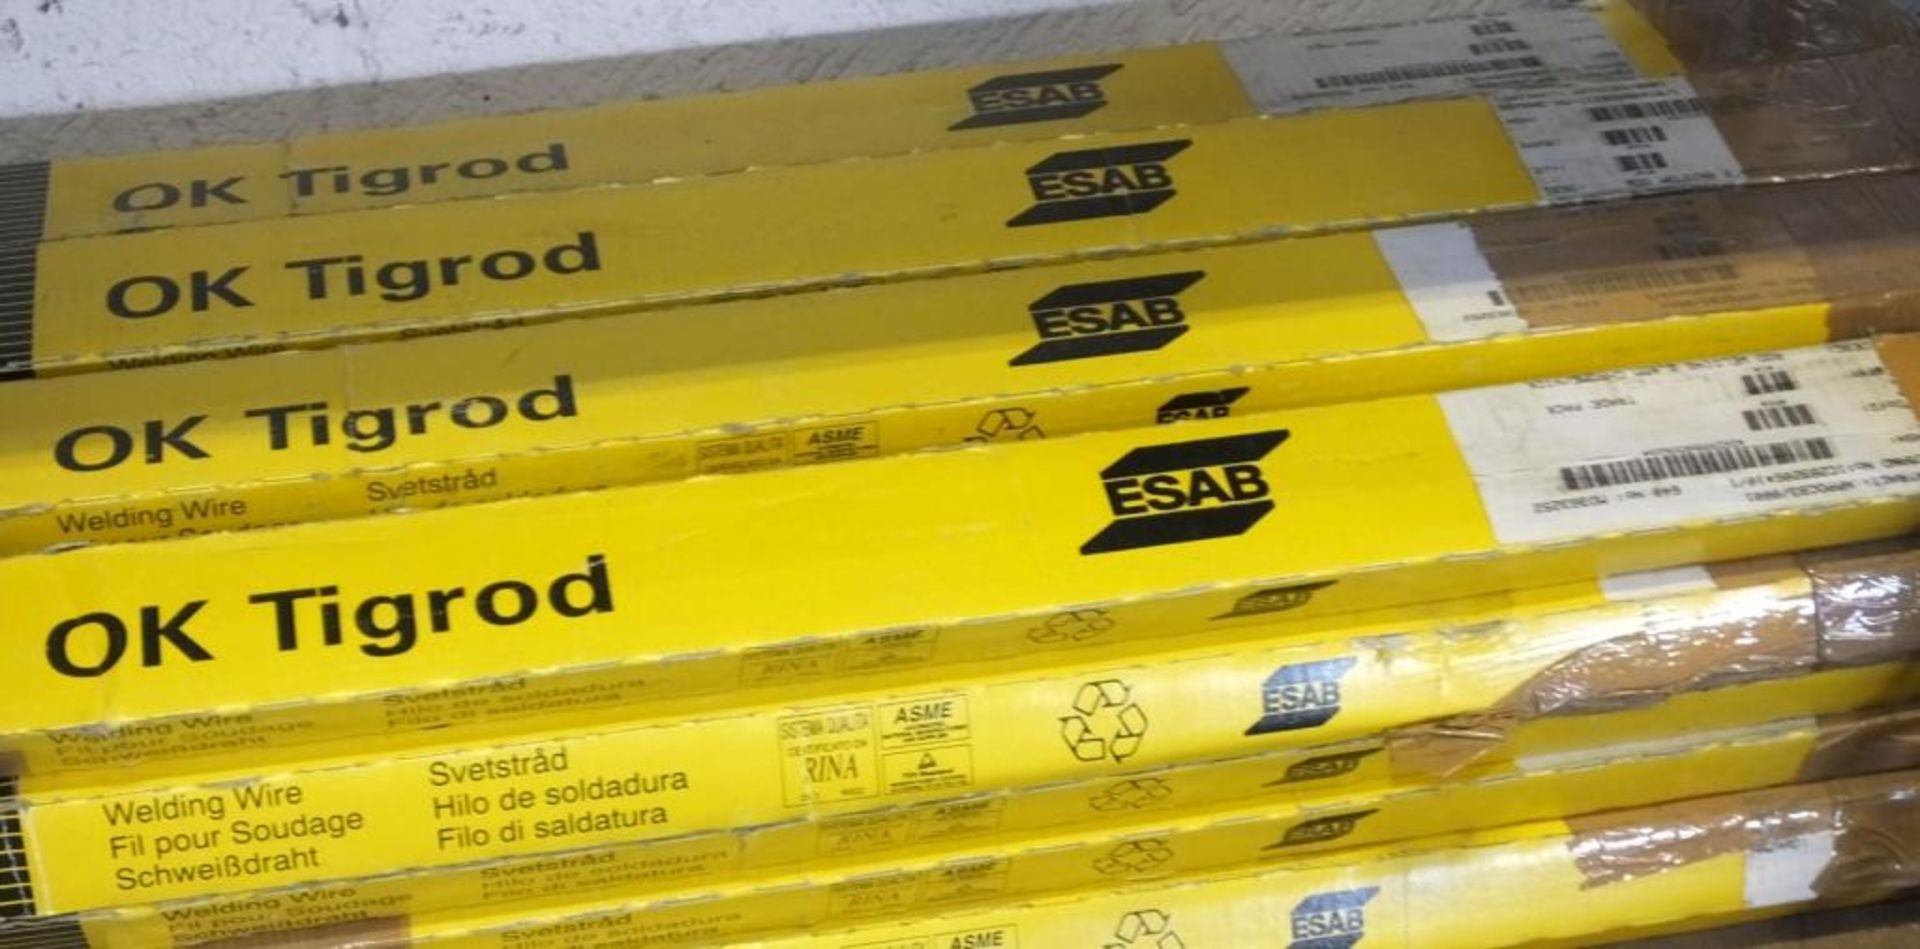 ESAB Welding Wire - OK Tigrod 16.75 2.4mm x 1000mm - 100 per pack - 5kg packs - 24 packs - Image 3 of 3